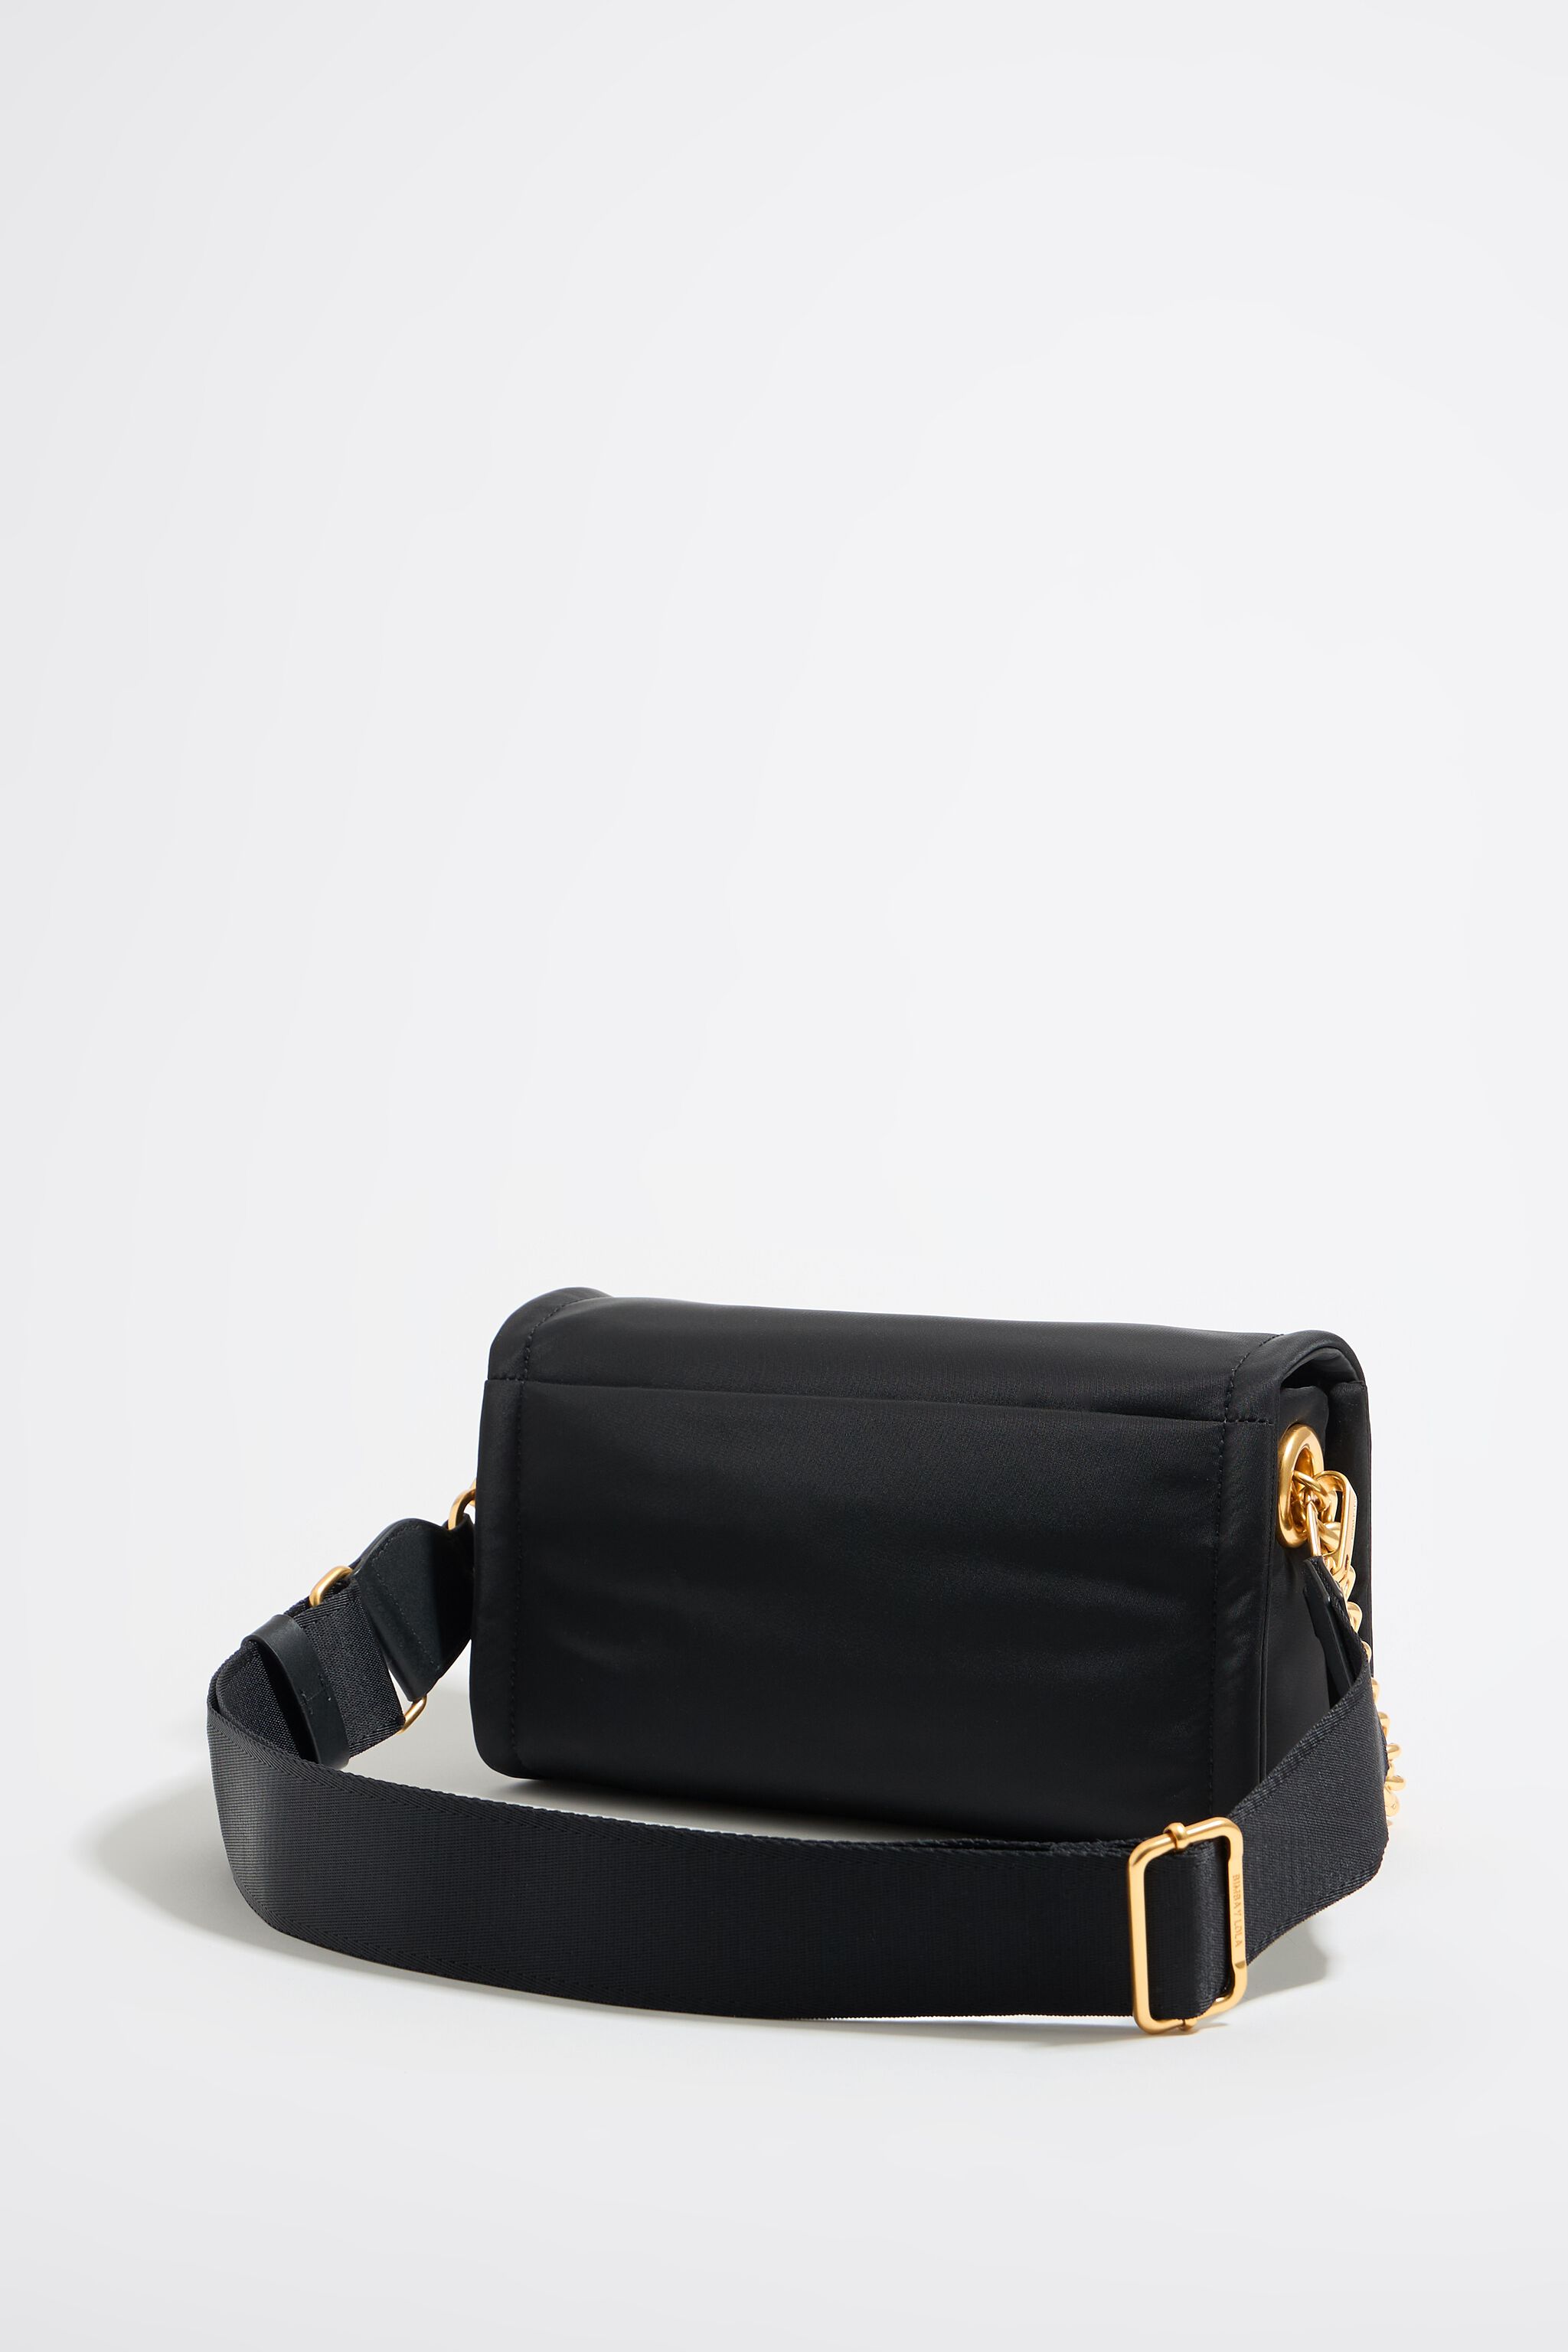 Medium black nylon flap bag